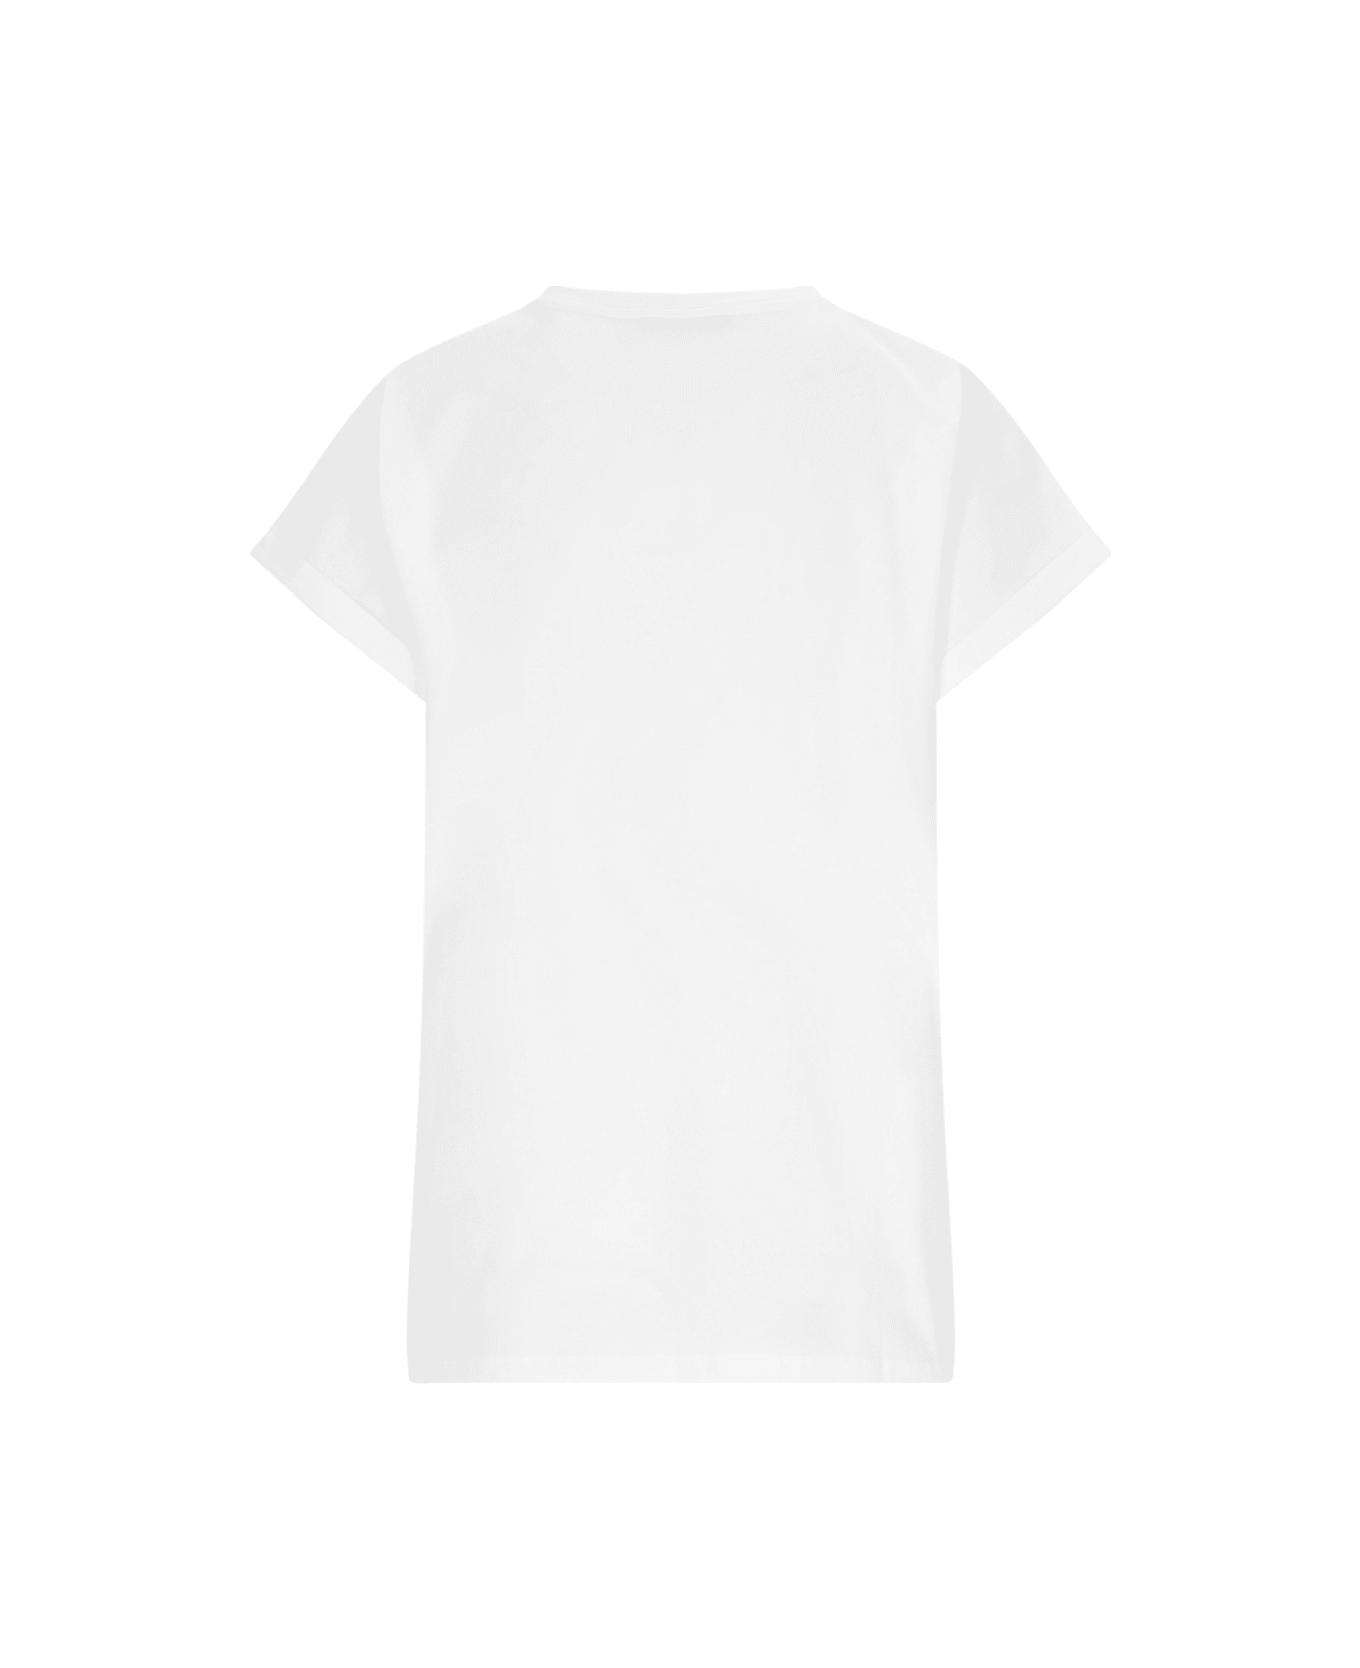 Balmain Flocked T-shirt - White